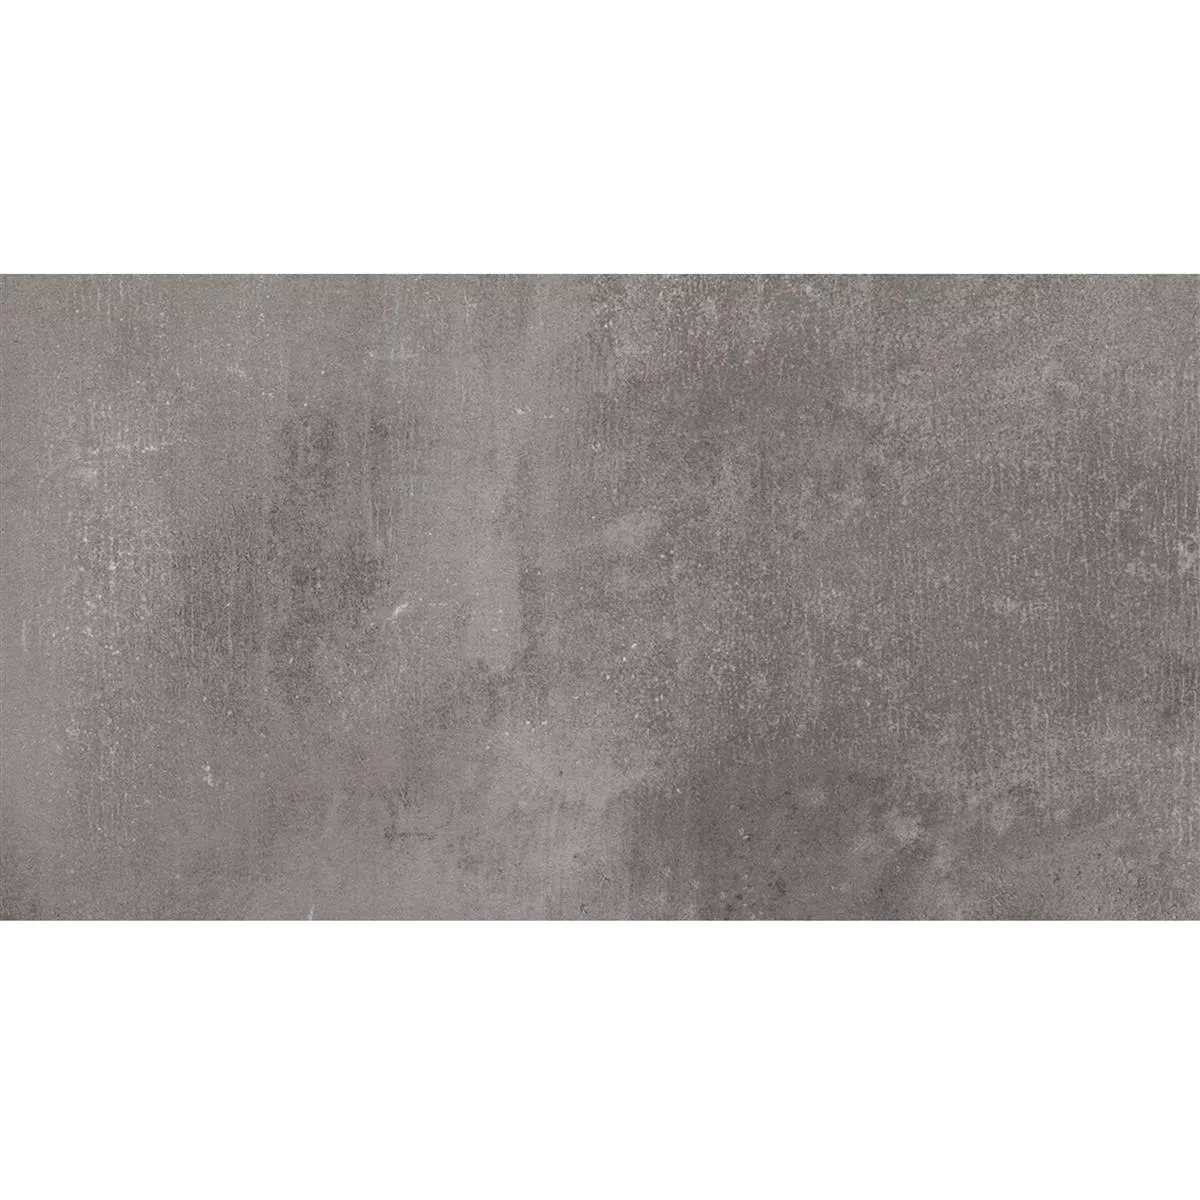 Ladrilho Castlebrook Olhar de Pedra Cinza 30x60cm